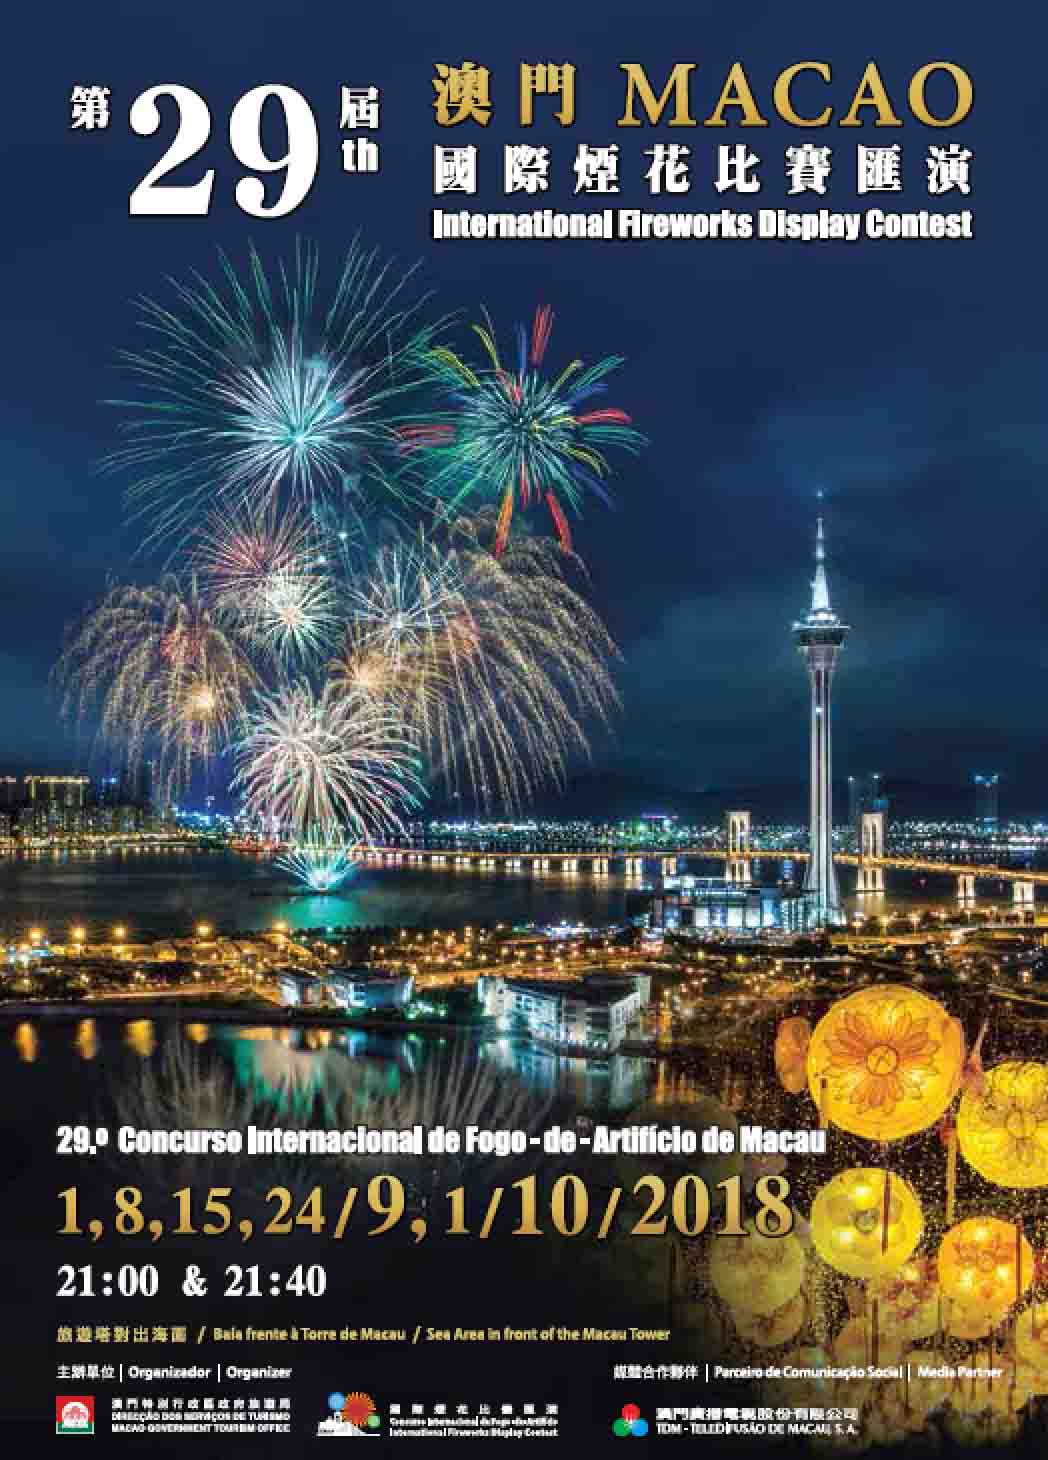 2018 Macao International Fireworks Display Contest